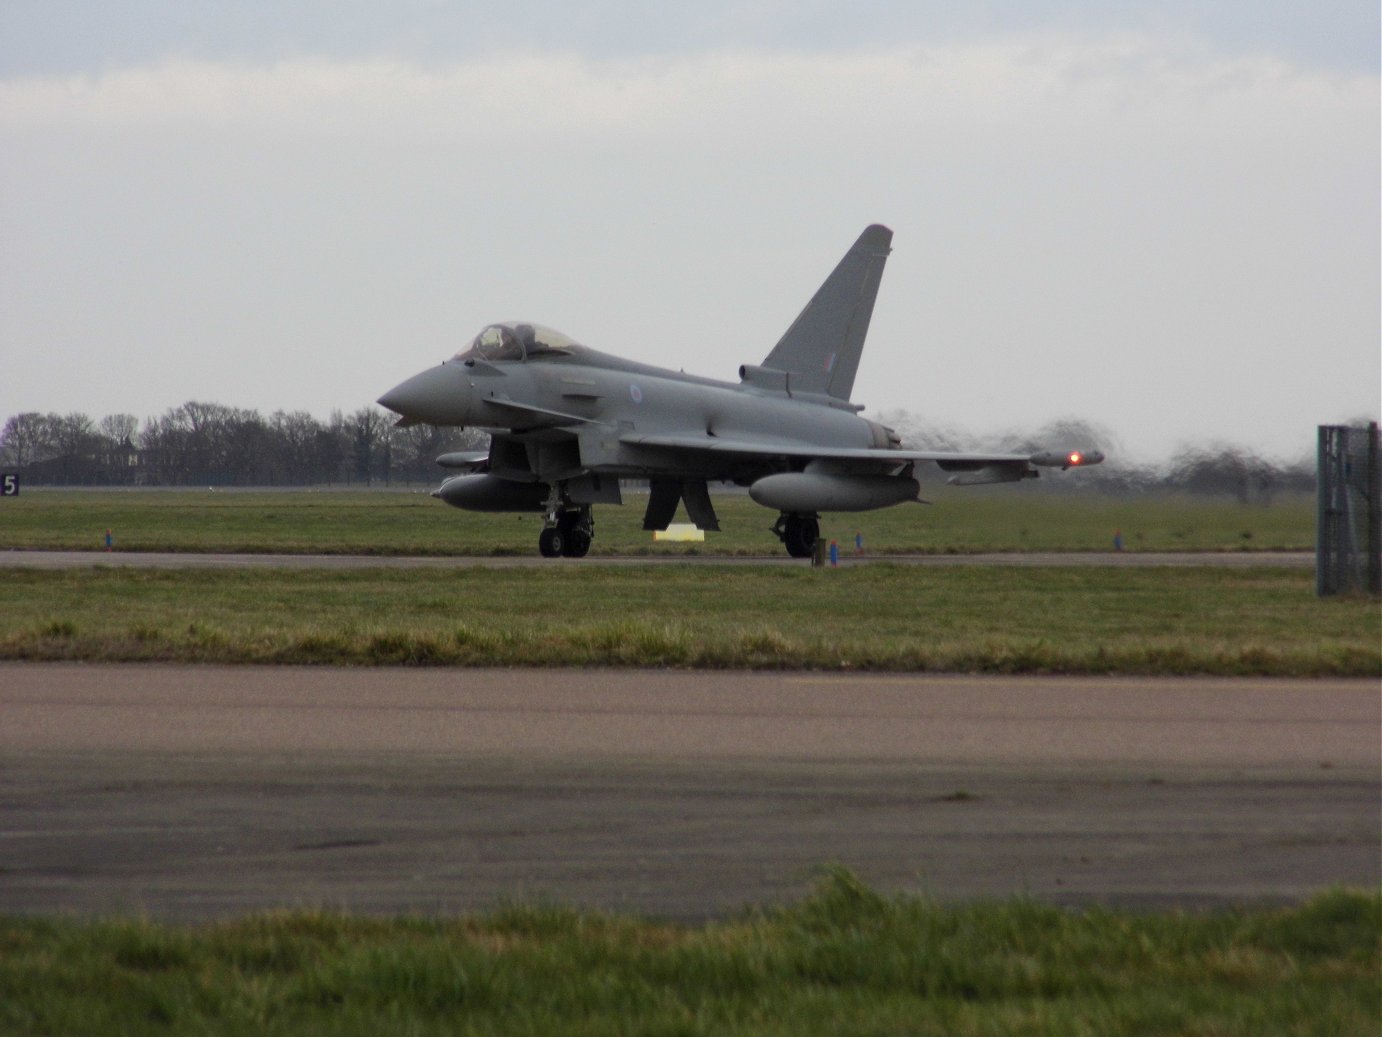 Typhoon FGR4 RAF Conningsby February 19th 2019.